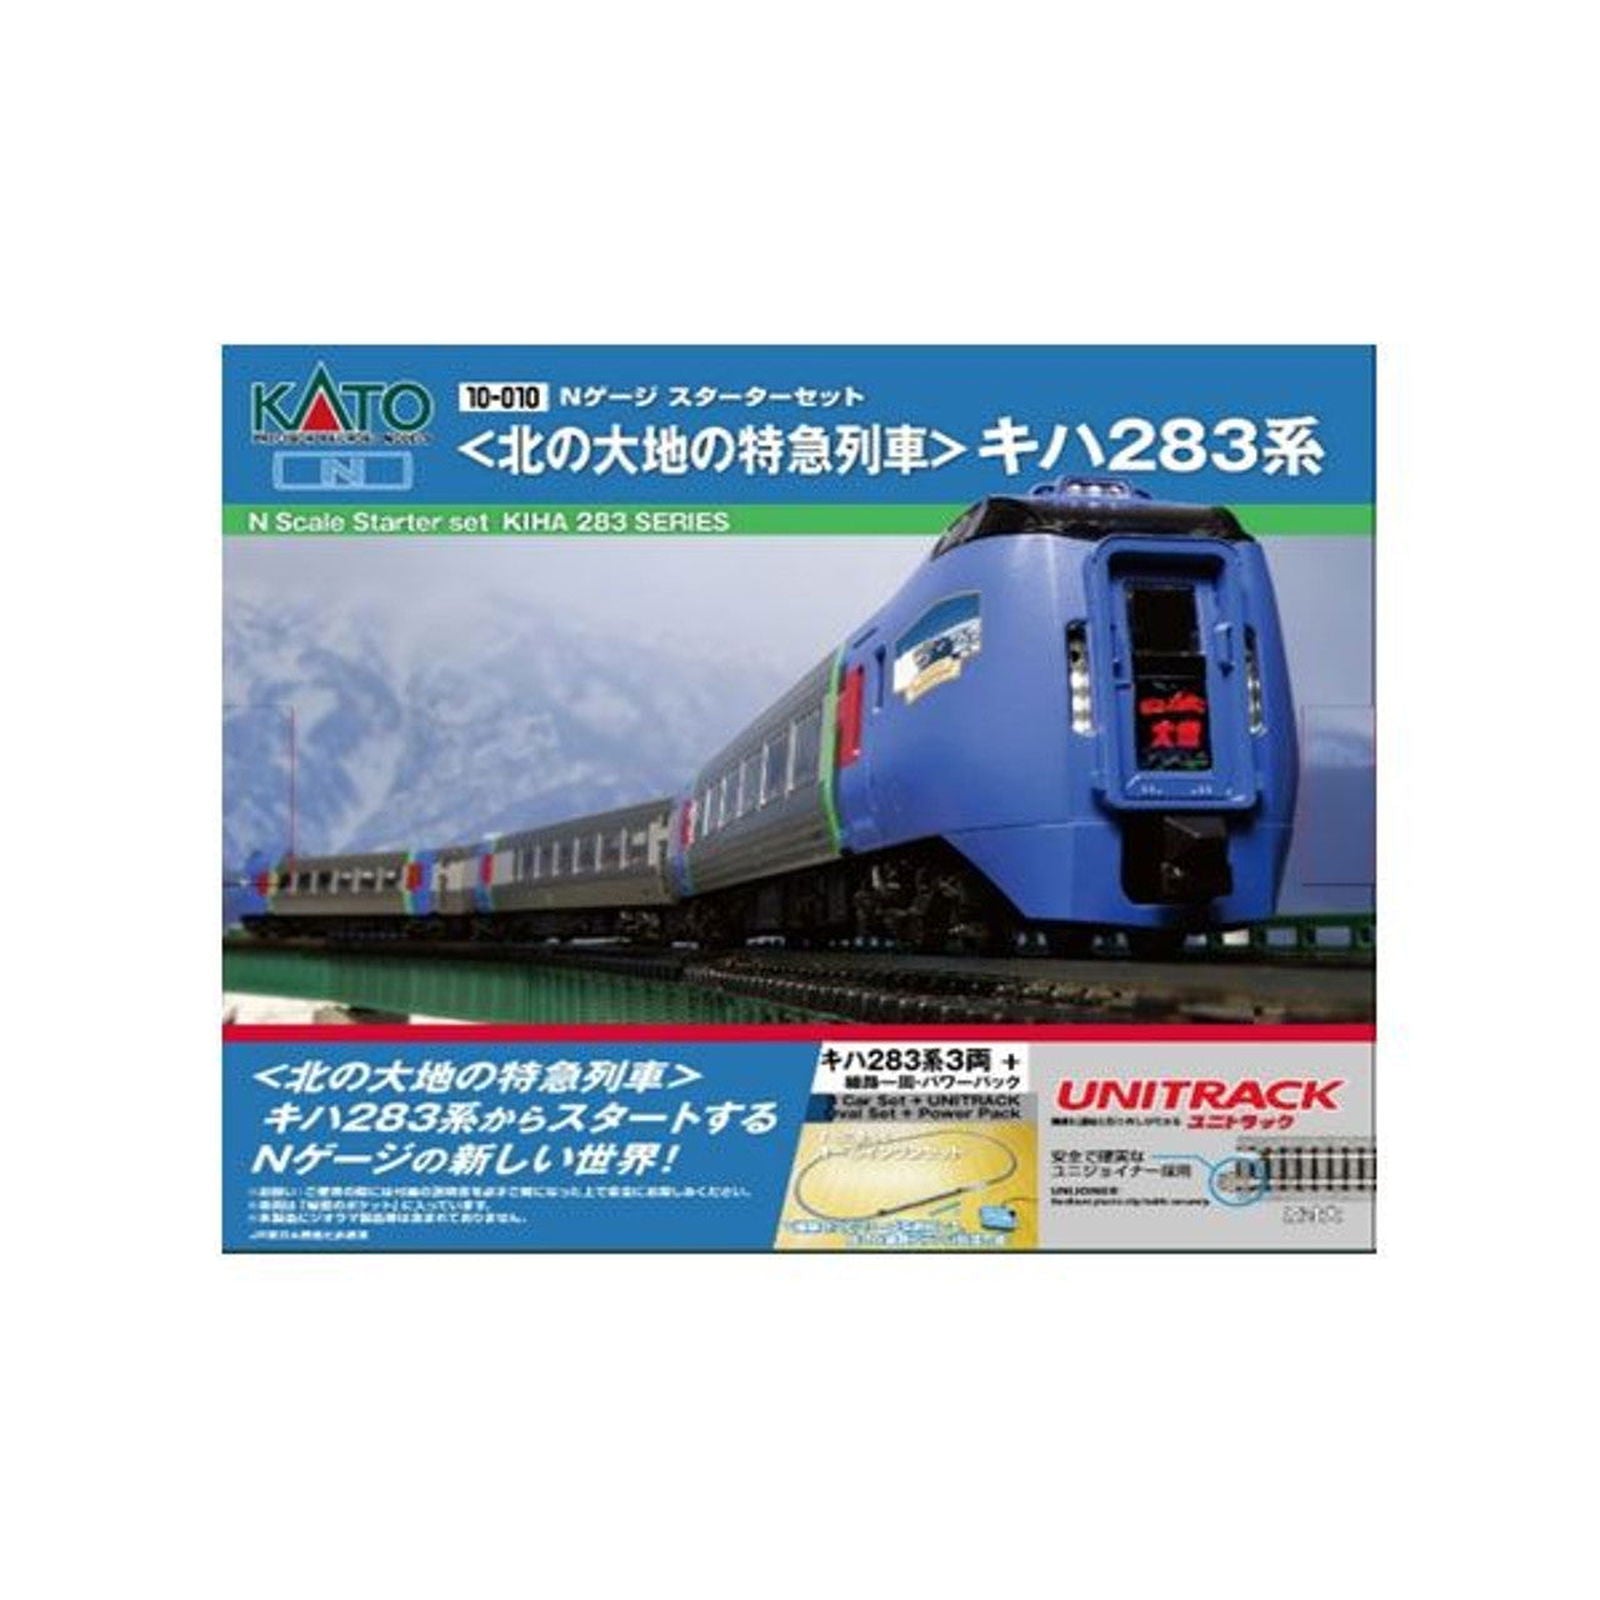 Kato 10-010 <Limited Express Train of the Northern Lands> Series KIHA 283 (3 Cars Set + Master 1 [M1]) (N scale) - BanzaiHobby